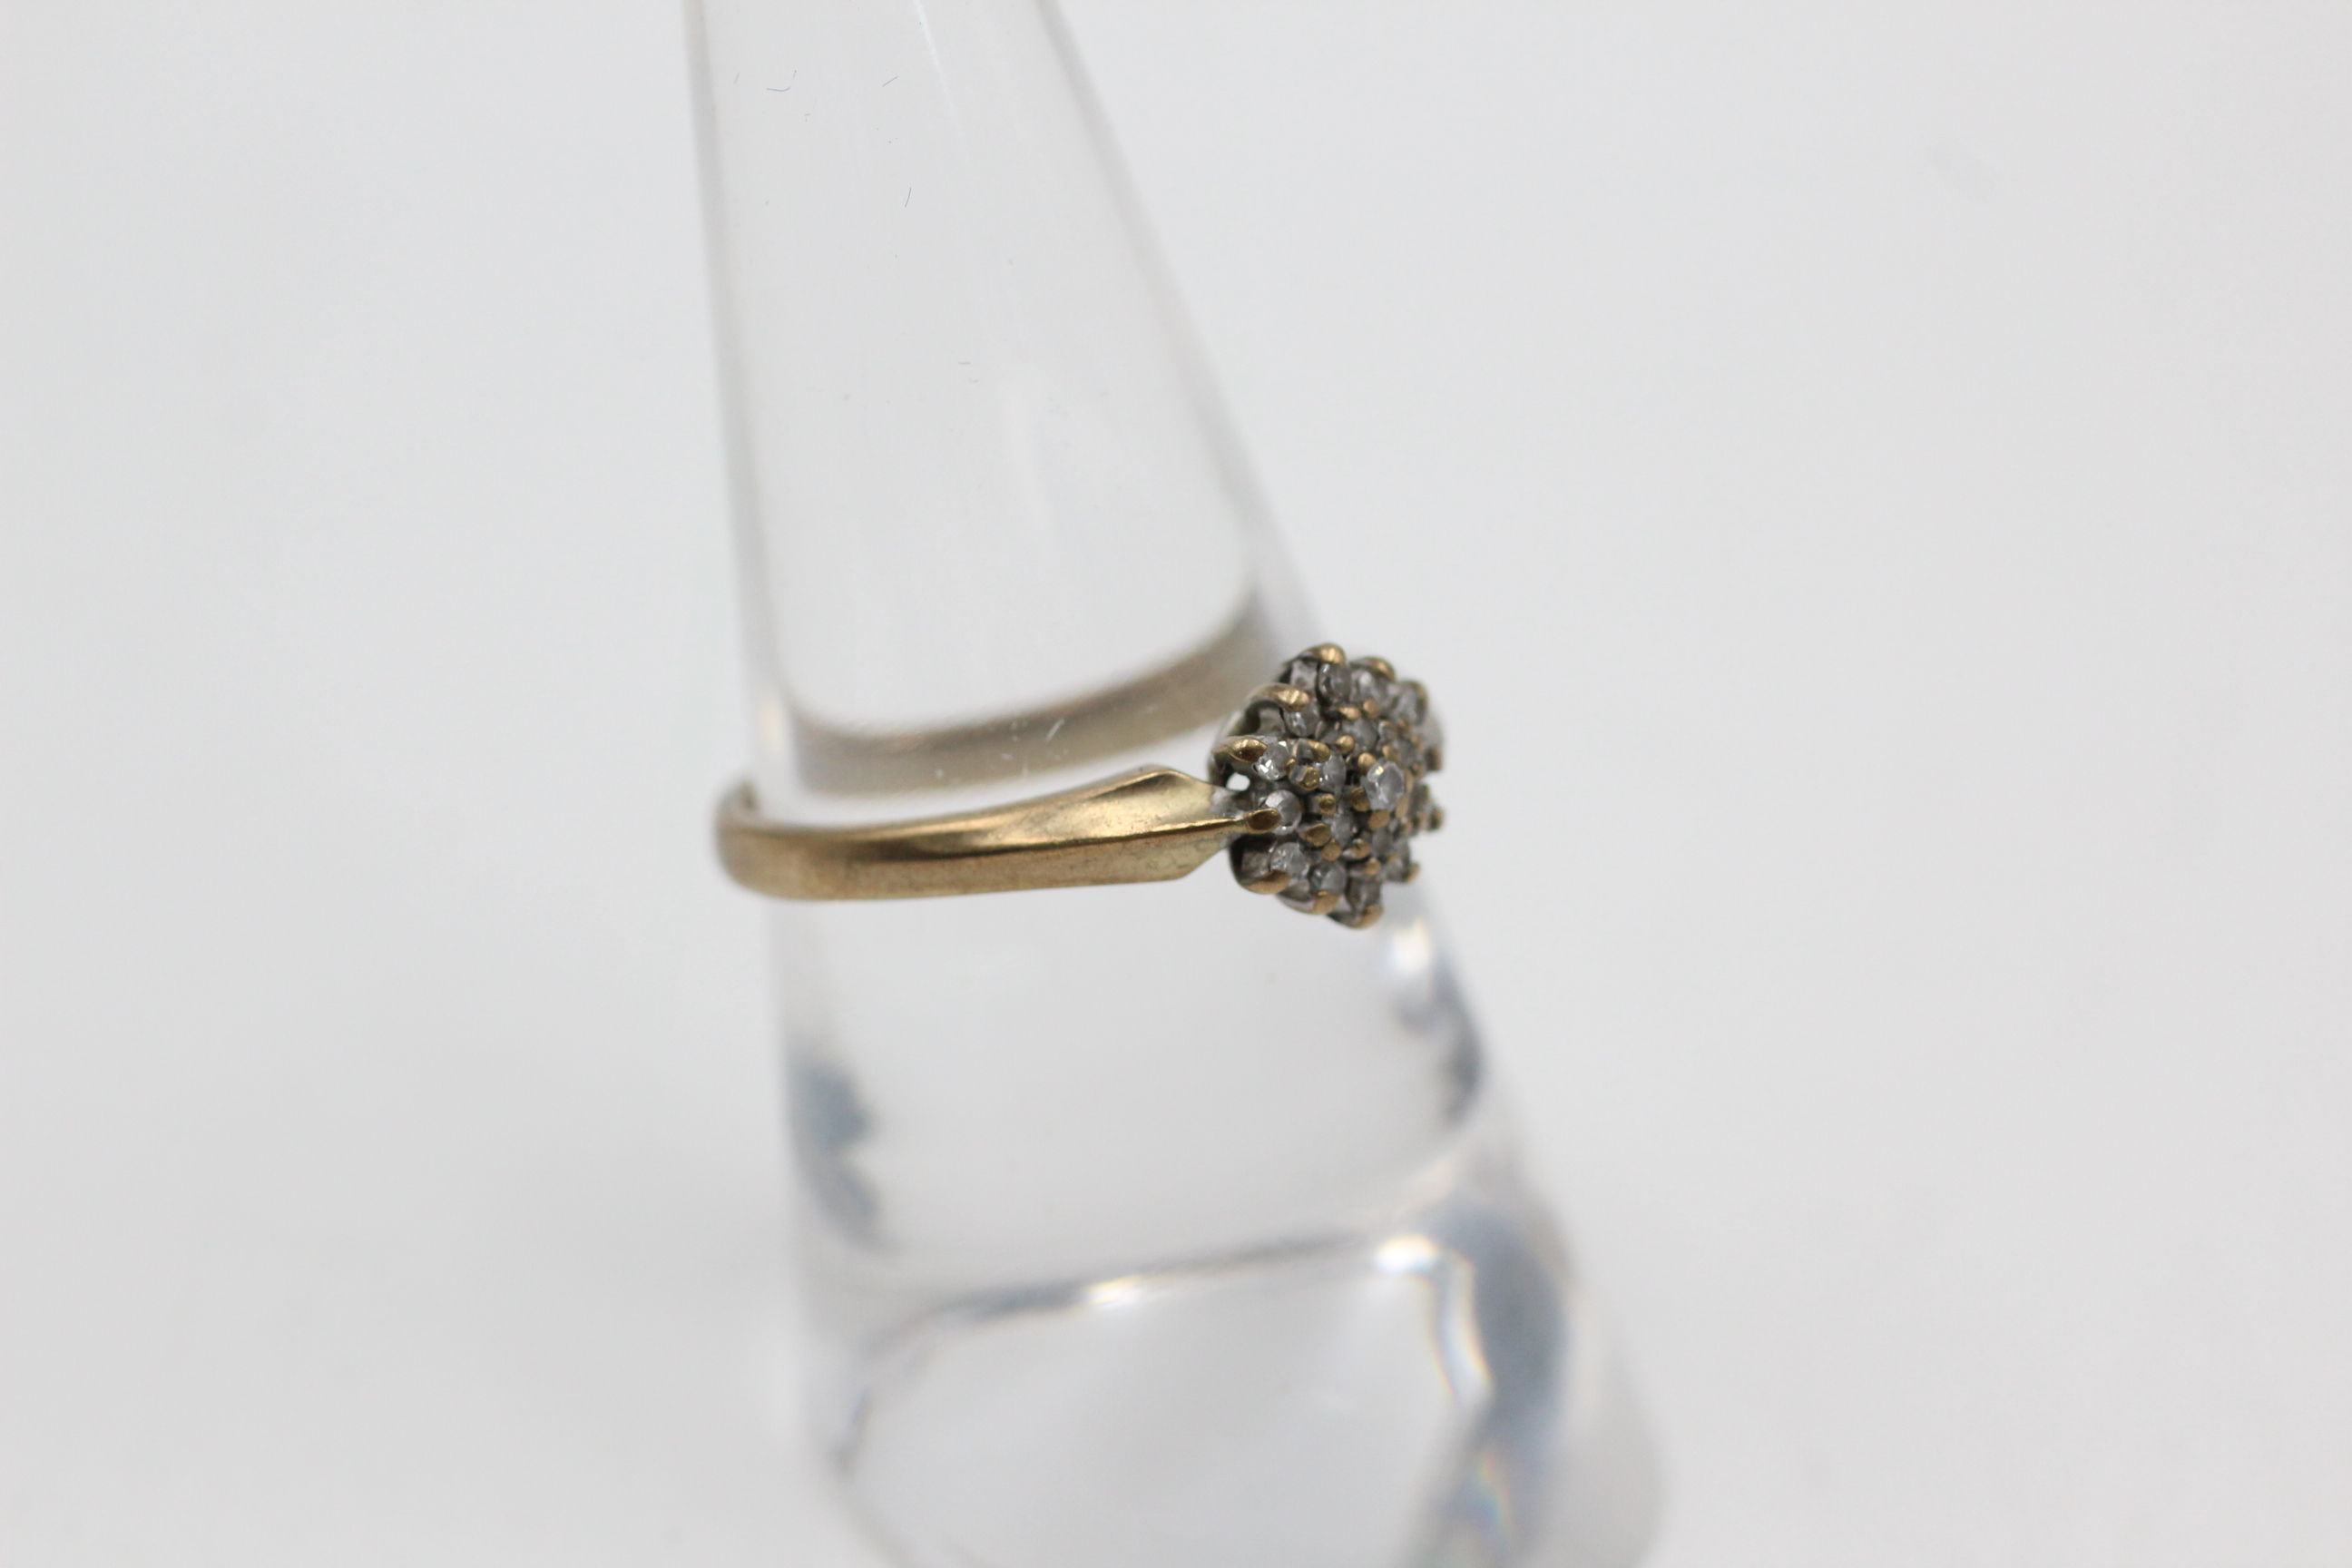 9ct gold gemstone cluster ring (2g) - Image 4 of 4